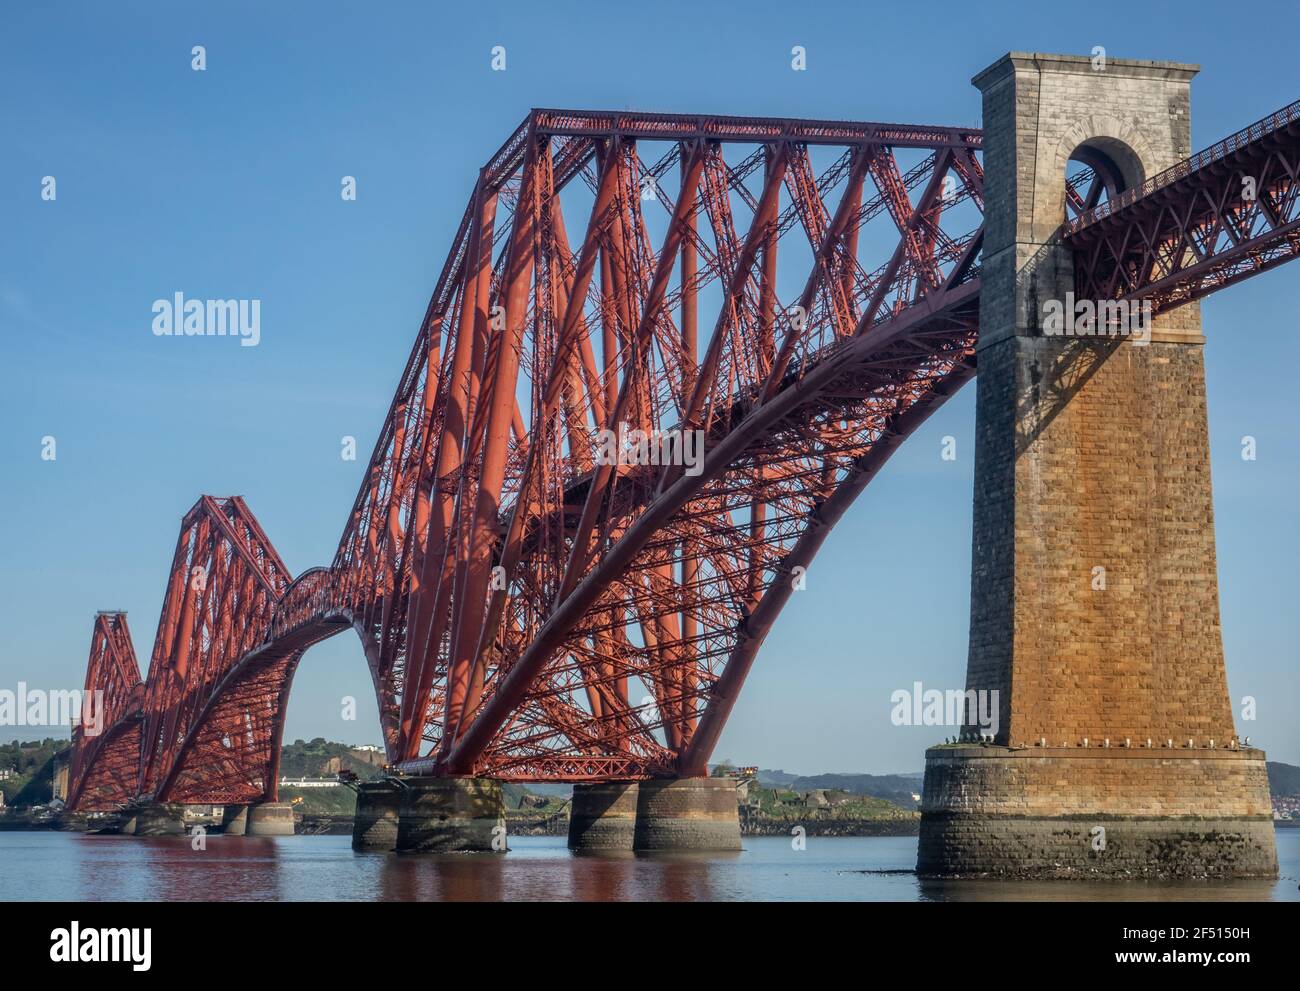 The Famous Forth Bridge In Edinburgh, Scotland, On A Bright Summer's Day Stock Photo